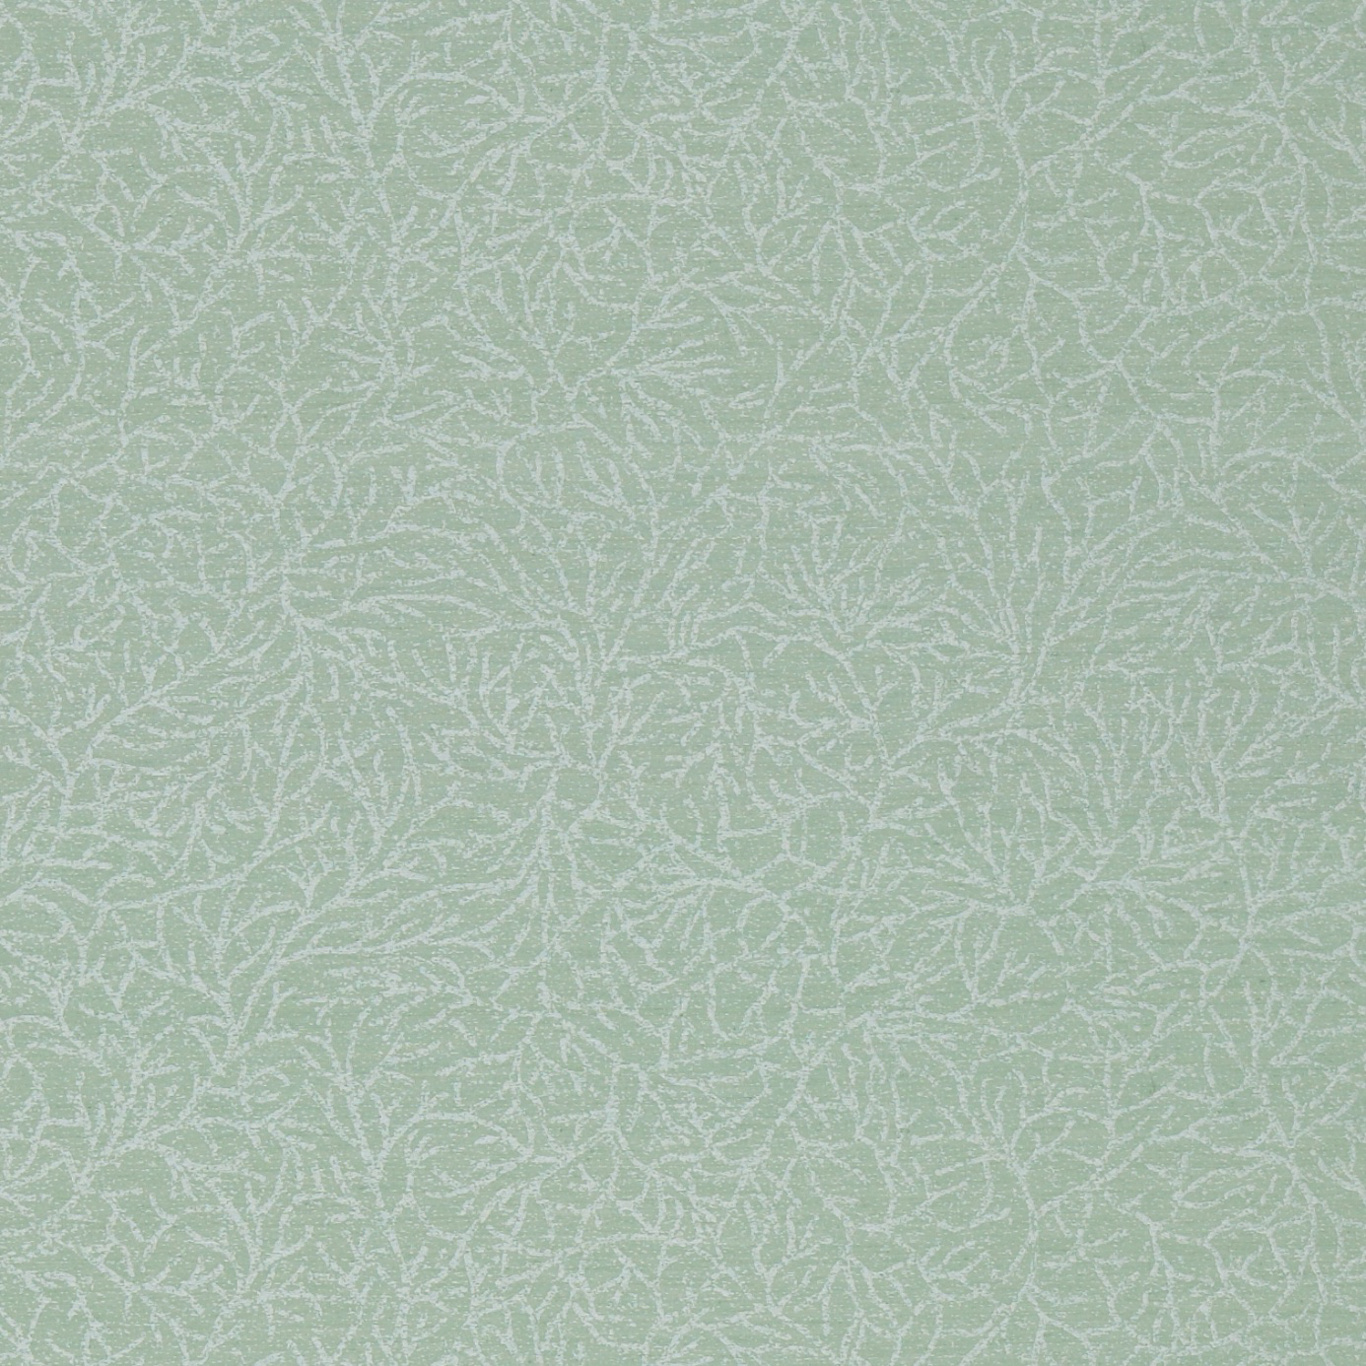 Ribbon Coral Sea Green Fabric by ZOF